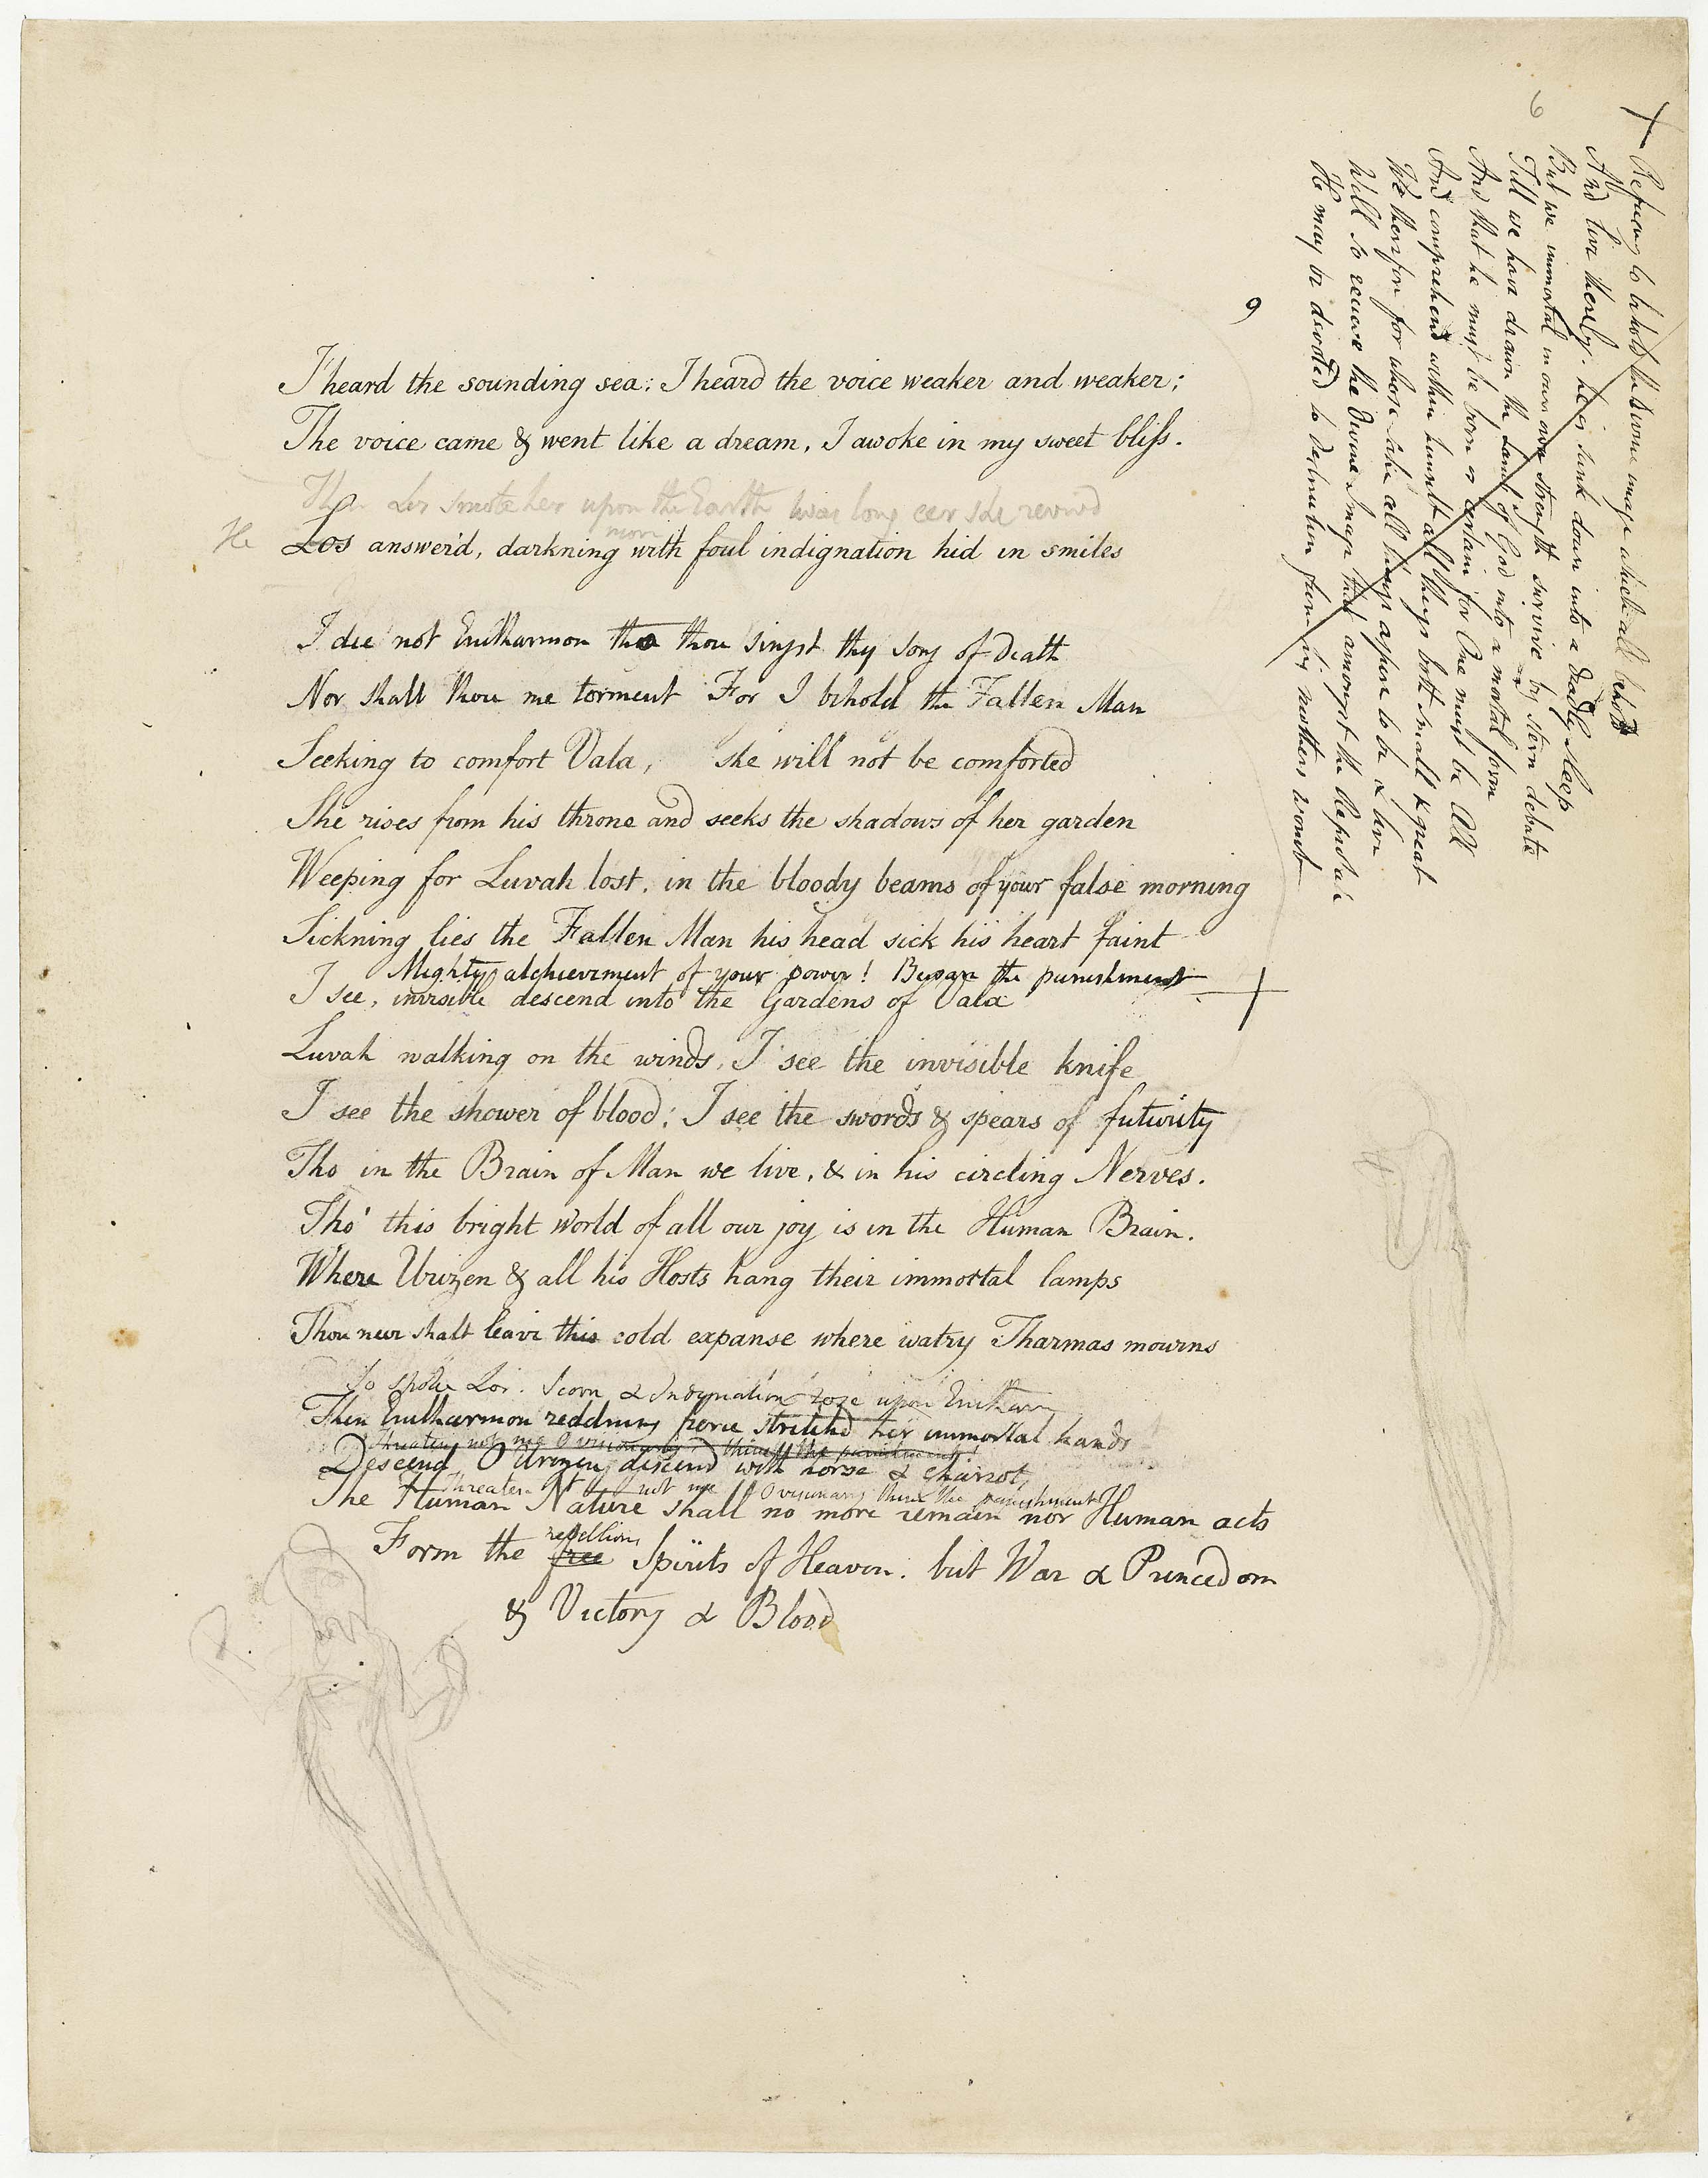 Manuscript image of William Blake's the Four Zoas.